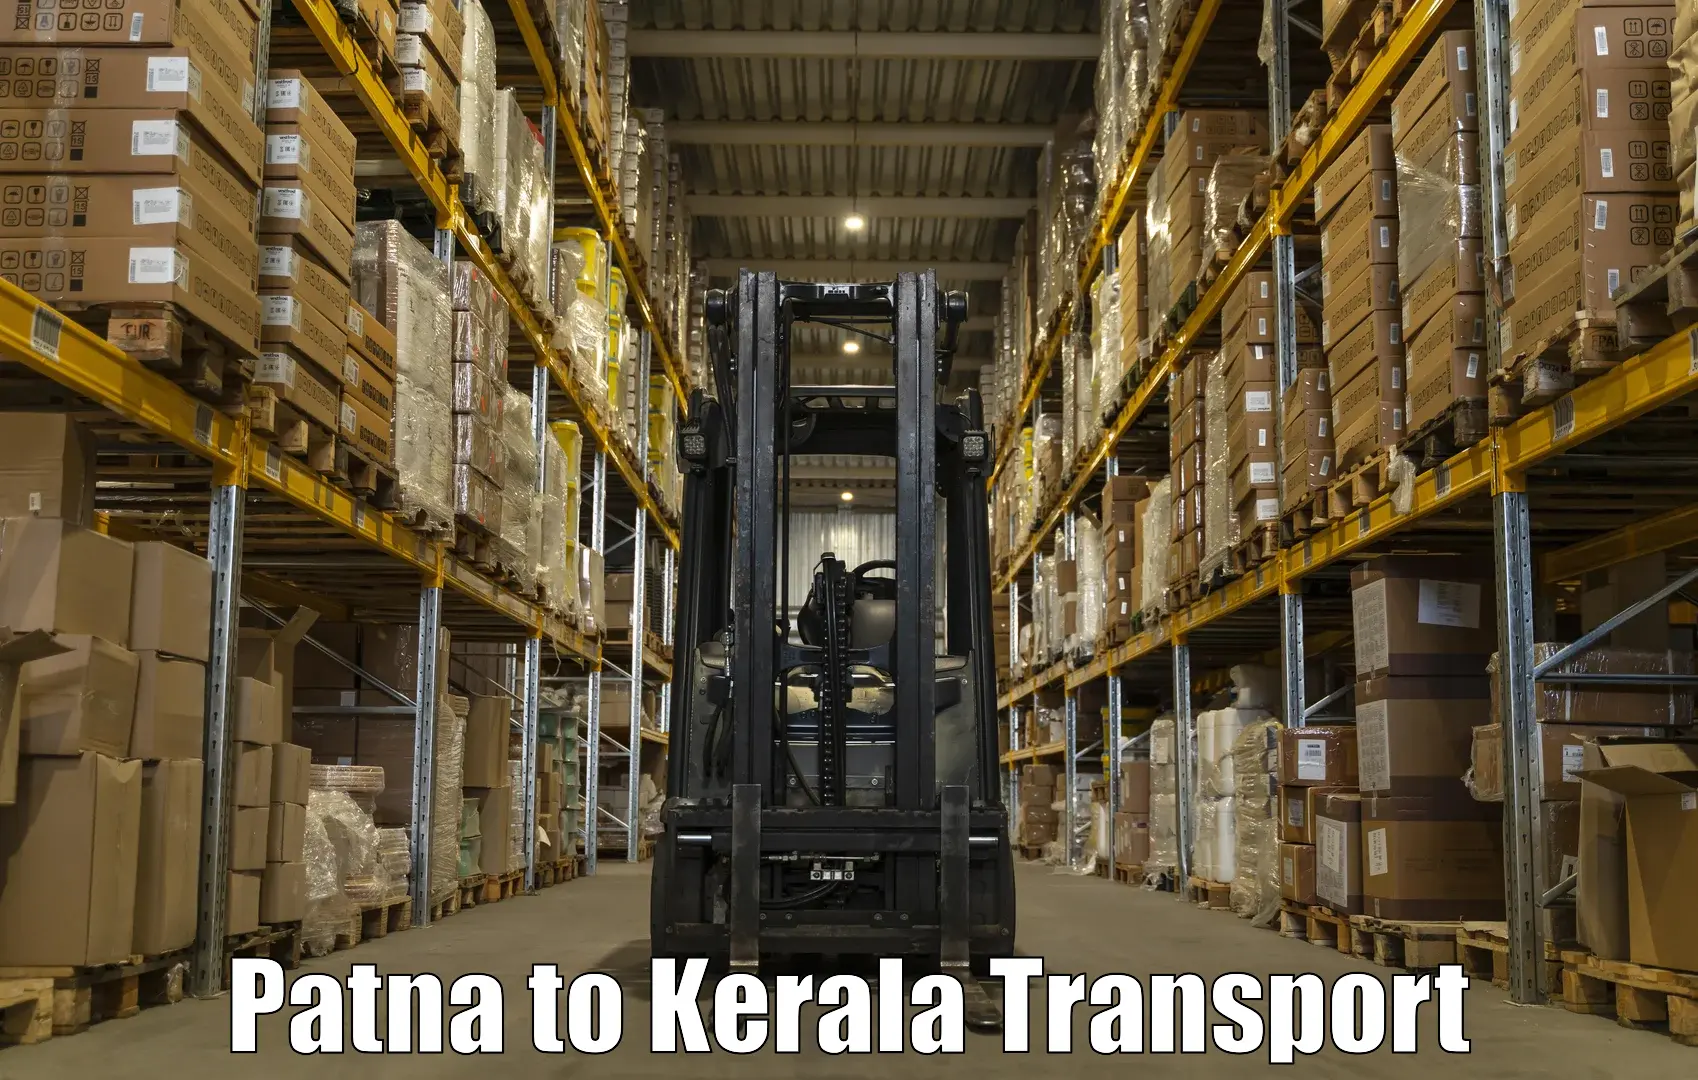 Shipping partner Patna to Kottayam